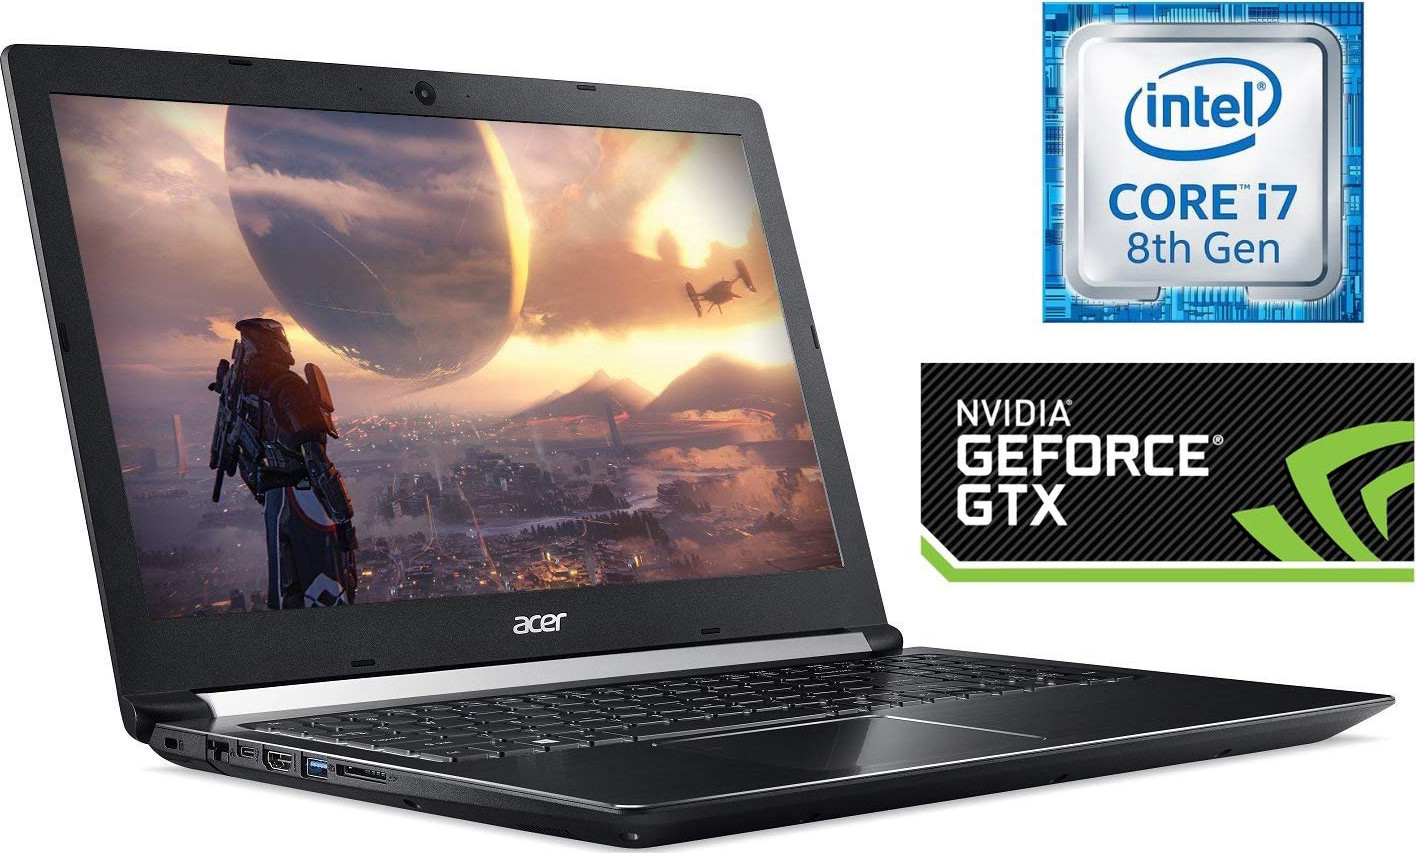 Acer Aspire 7 Casual Gaming Laptop, 15.6" Full HD IPS Display, Intel 6-Core i7-8750H, NVIDIA GeForce GTX 1050Ti 4GB, 8GB DDR4, 128GB SSD + 1TB HDD, Fingerprint Reader, Windows 10 64bit, A715-72G-71CT